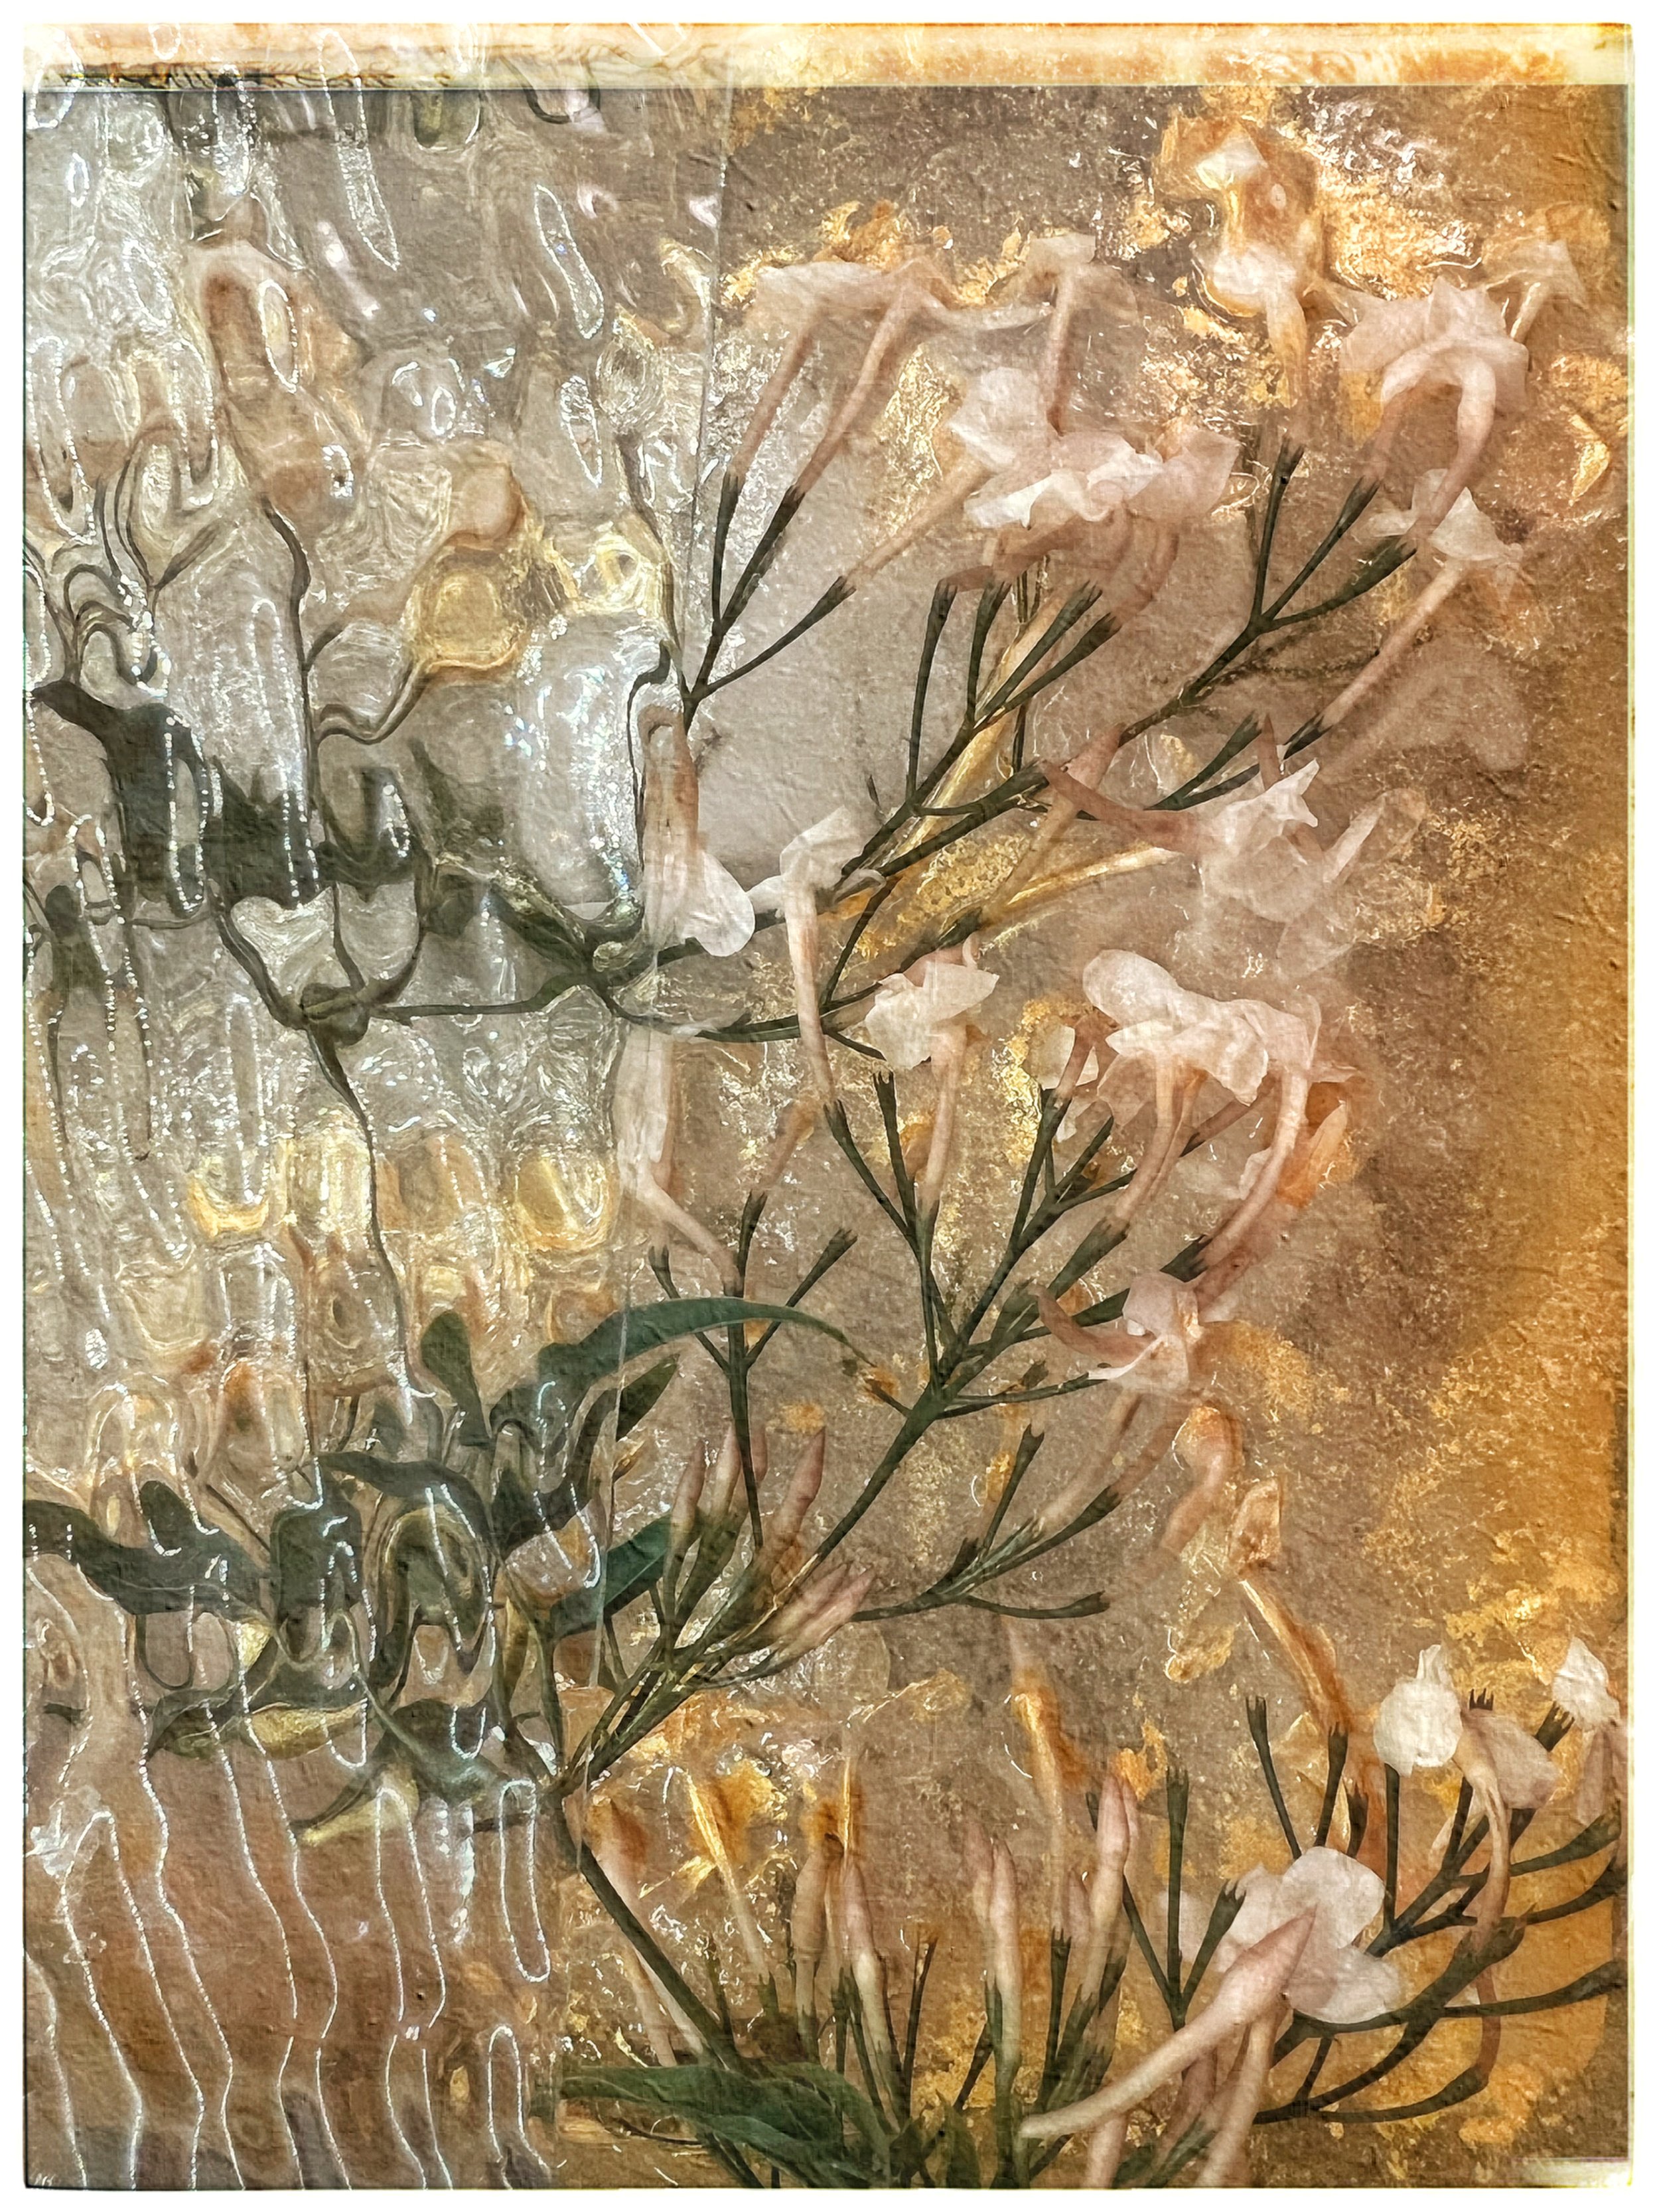  iced jasmine, gold leaf, textured glass, wonder. 